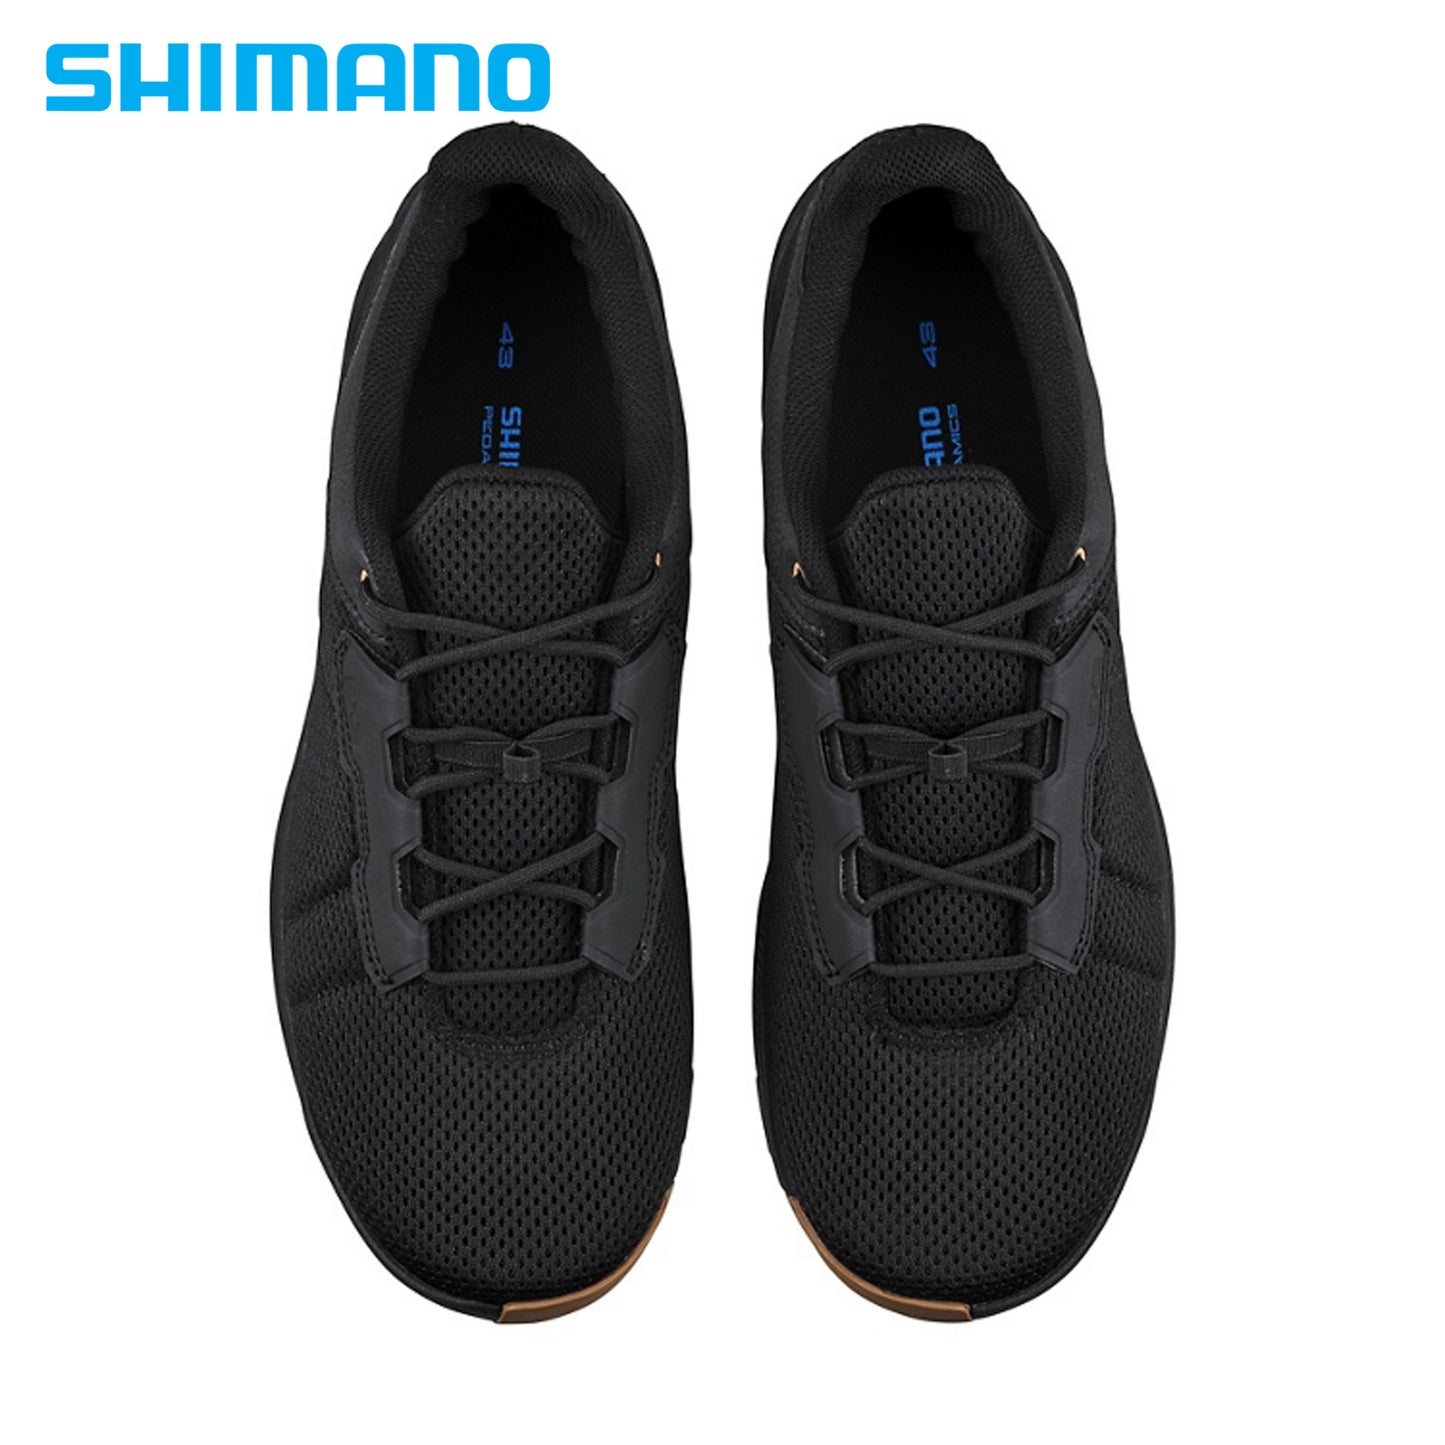 Shimano EX3 City-Touring Shoes (SH-EX300) - Black